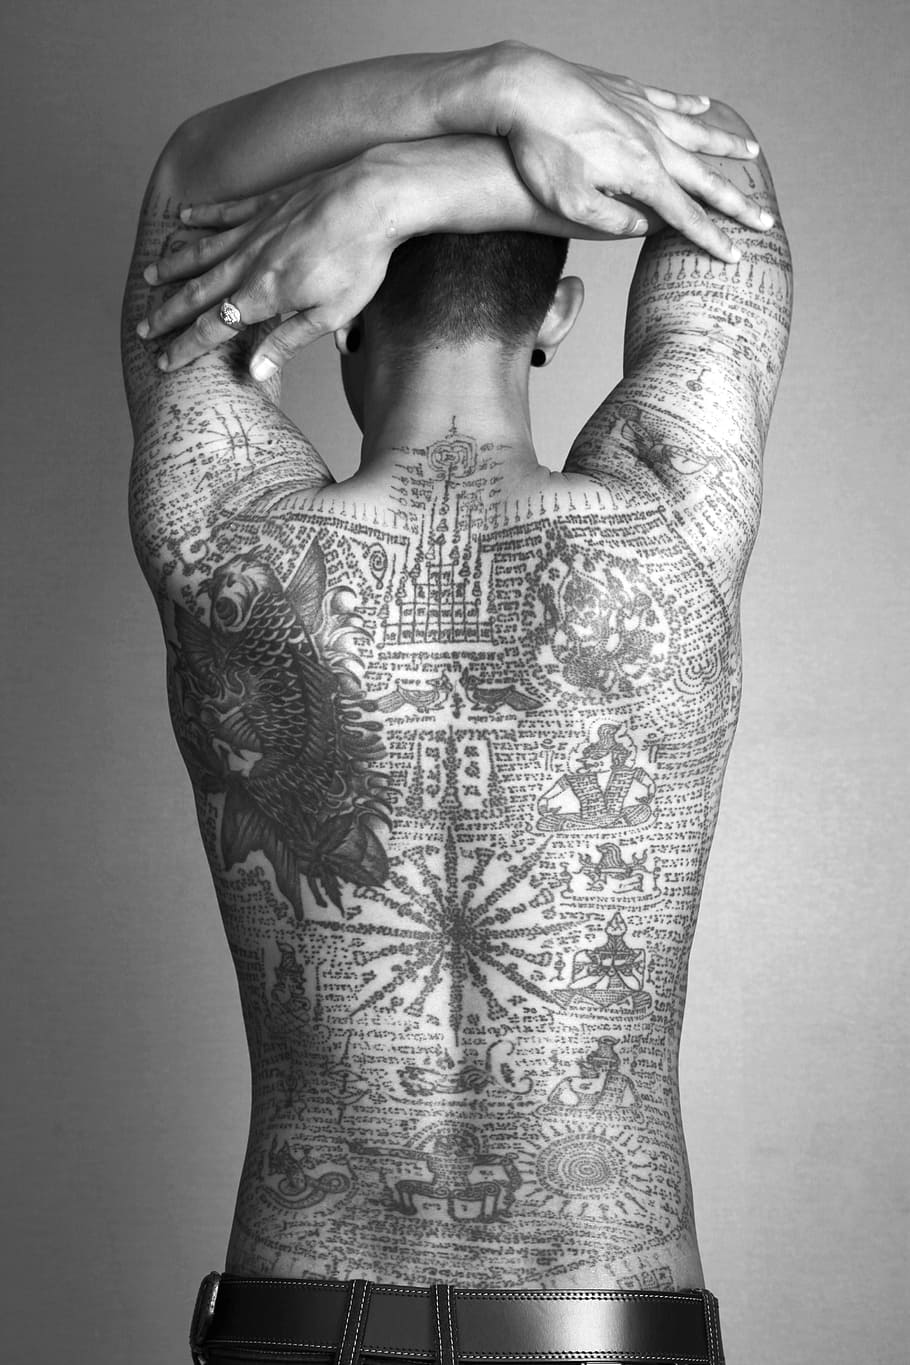 man, full, back, tattoo grayscale photo, full back, tattoo, grayscale, thai, traditional, bamboo